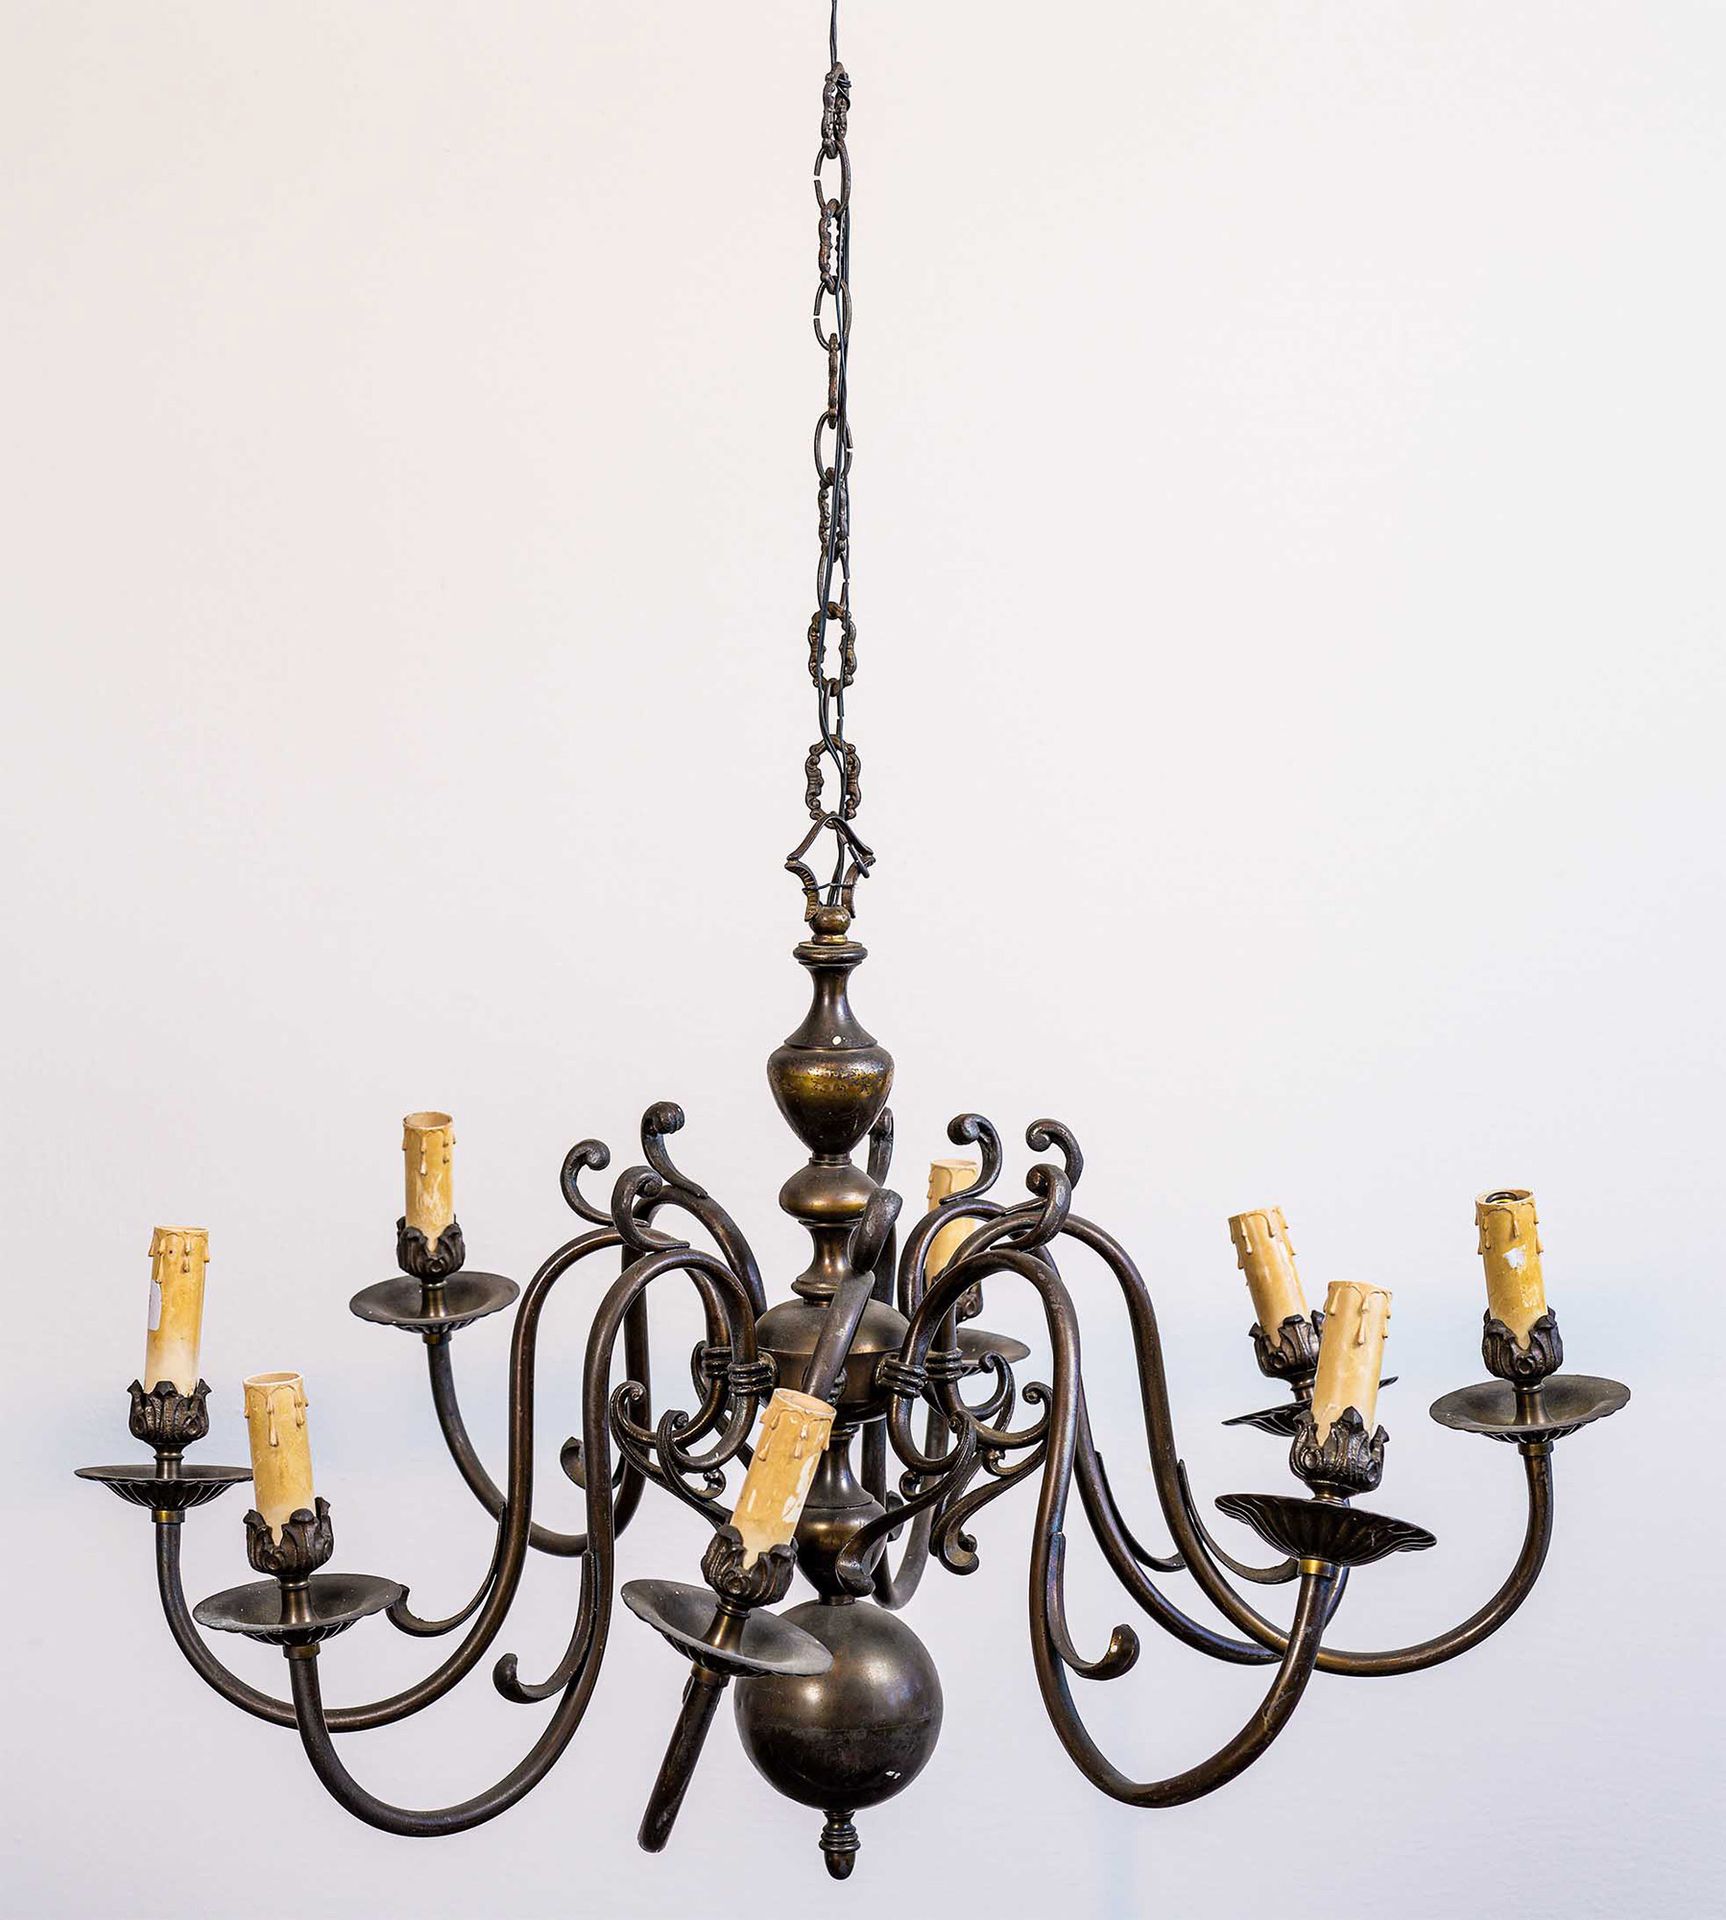 Null 十七世纪的荷兰式吊灯

抛光铜制，有六只手臂